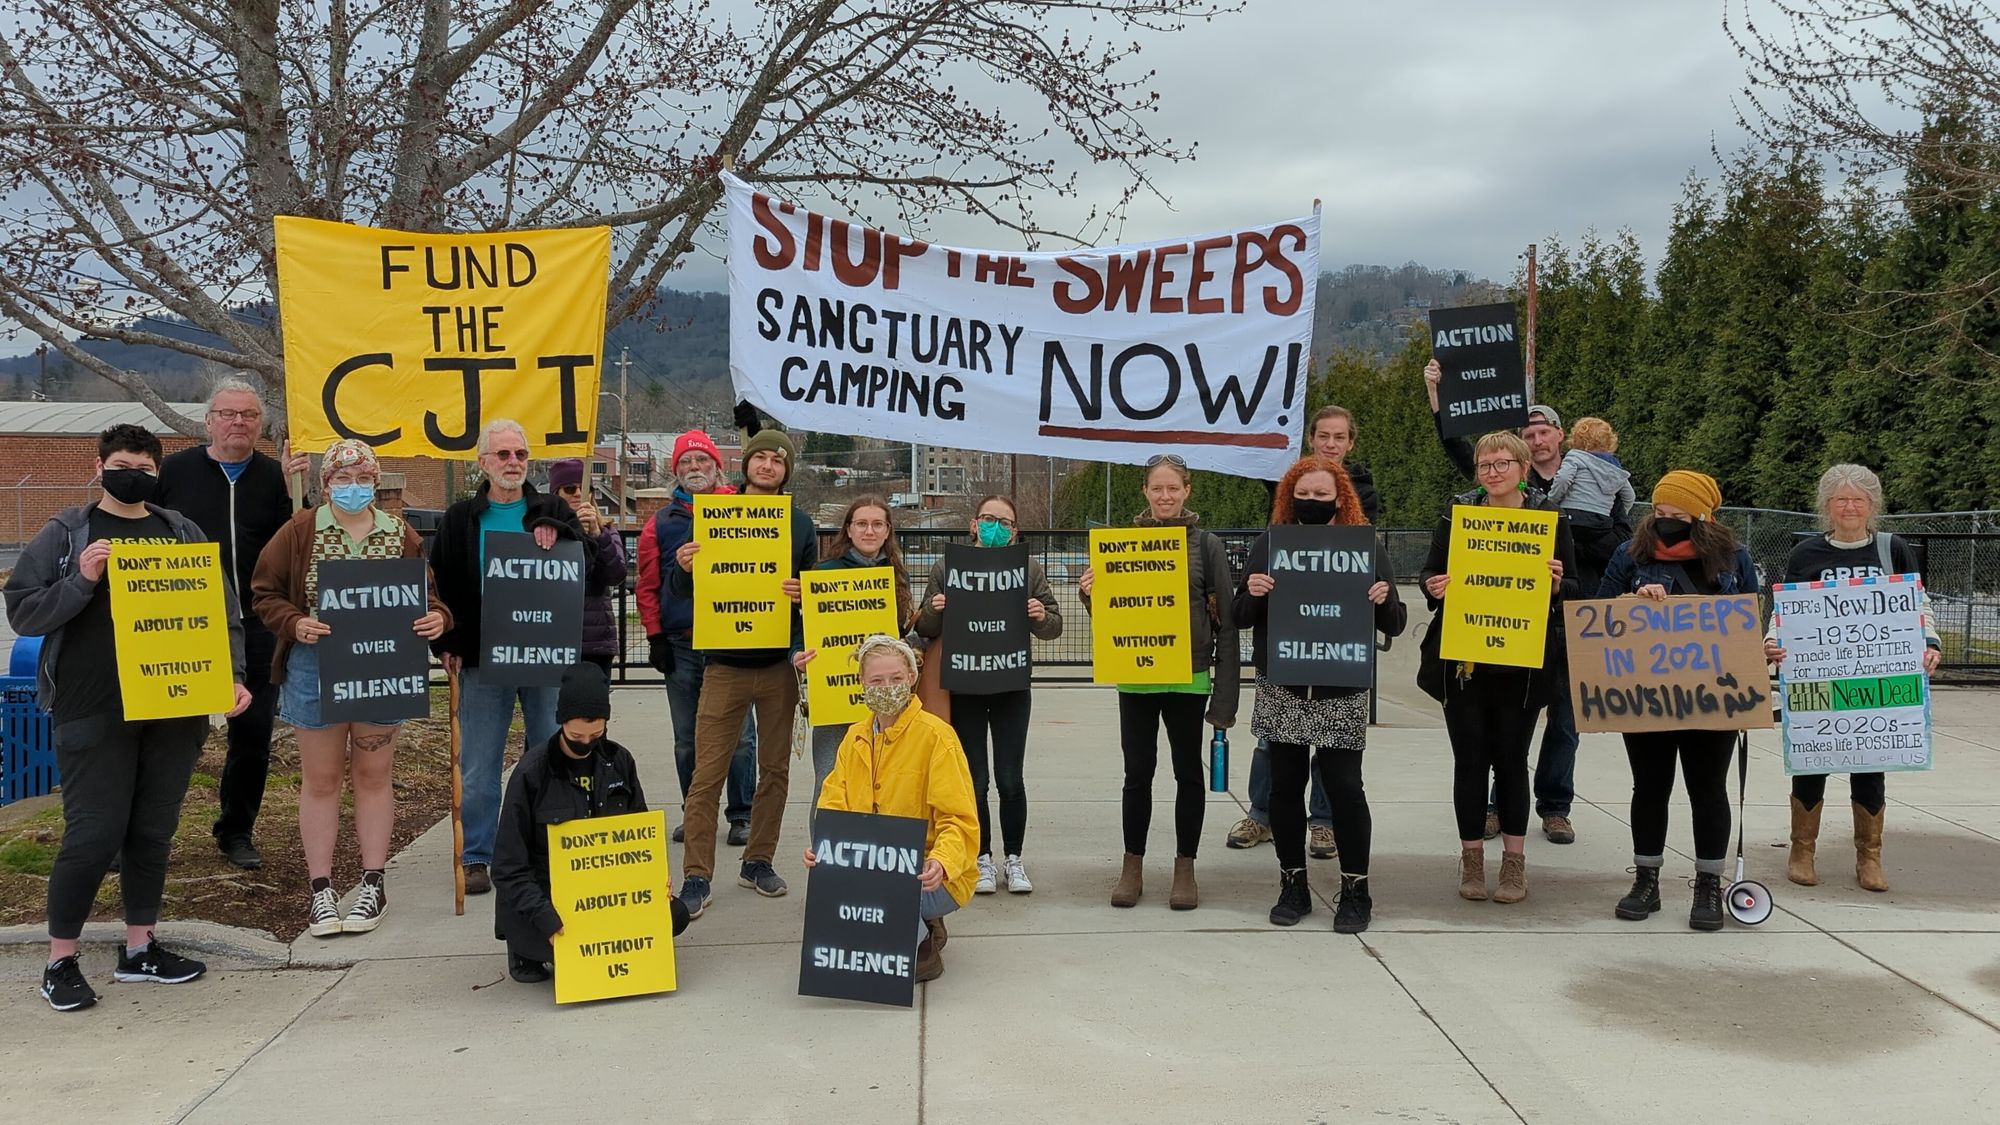 Activists Disrupt City Council Retreat; Demand Sanctuary Camping and Climate Justice